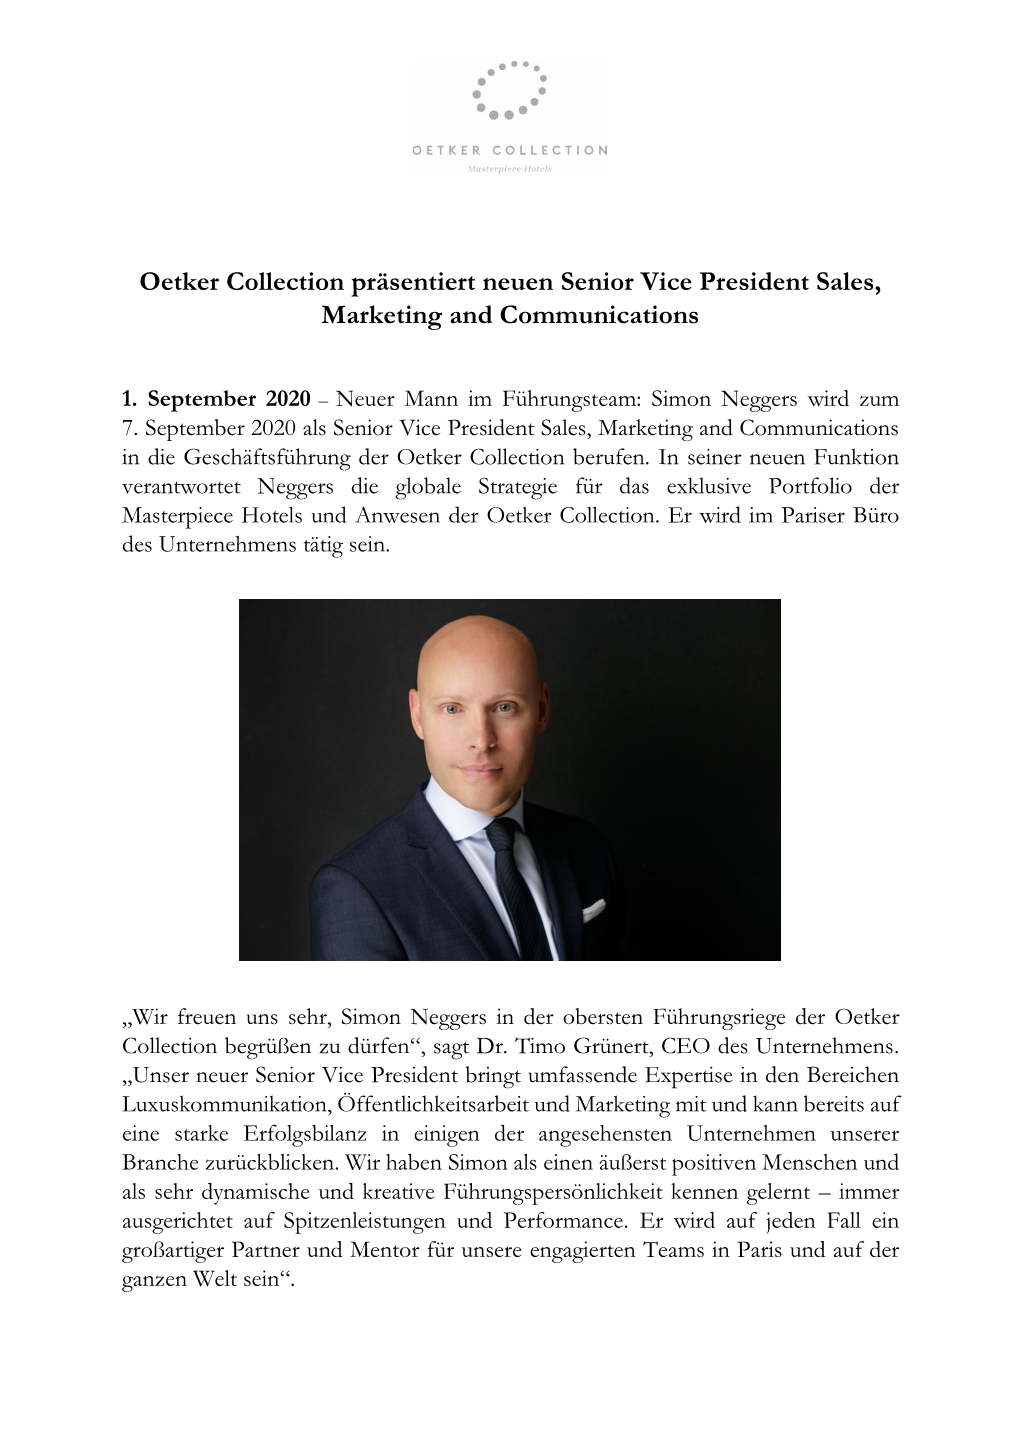 Oetker Collection Präsentiert Neuen Senior Vice President Sales, Marketing and Communications